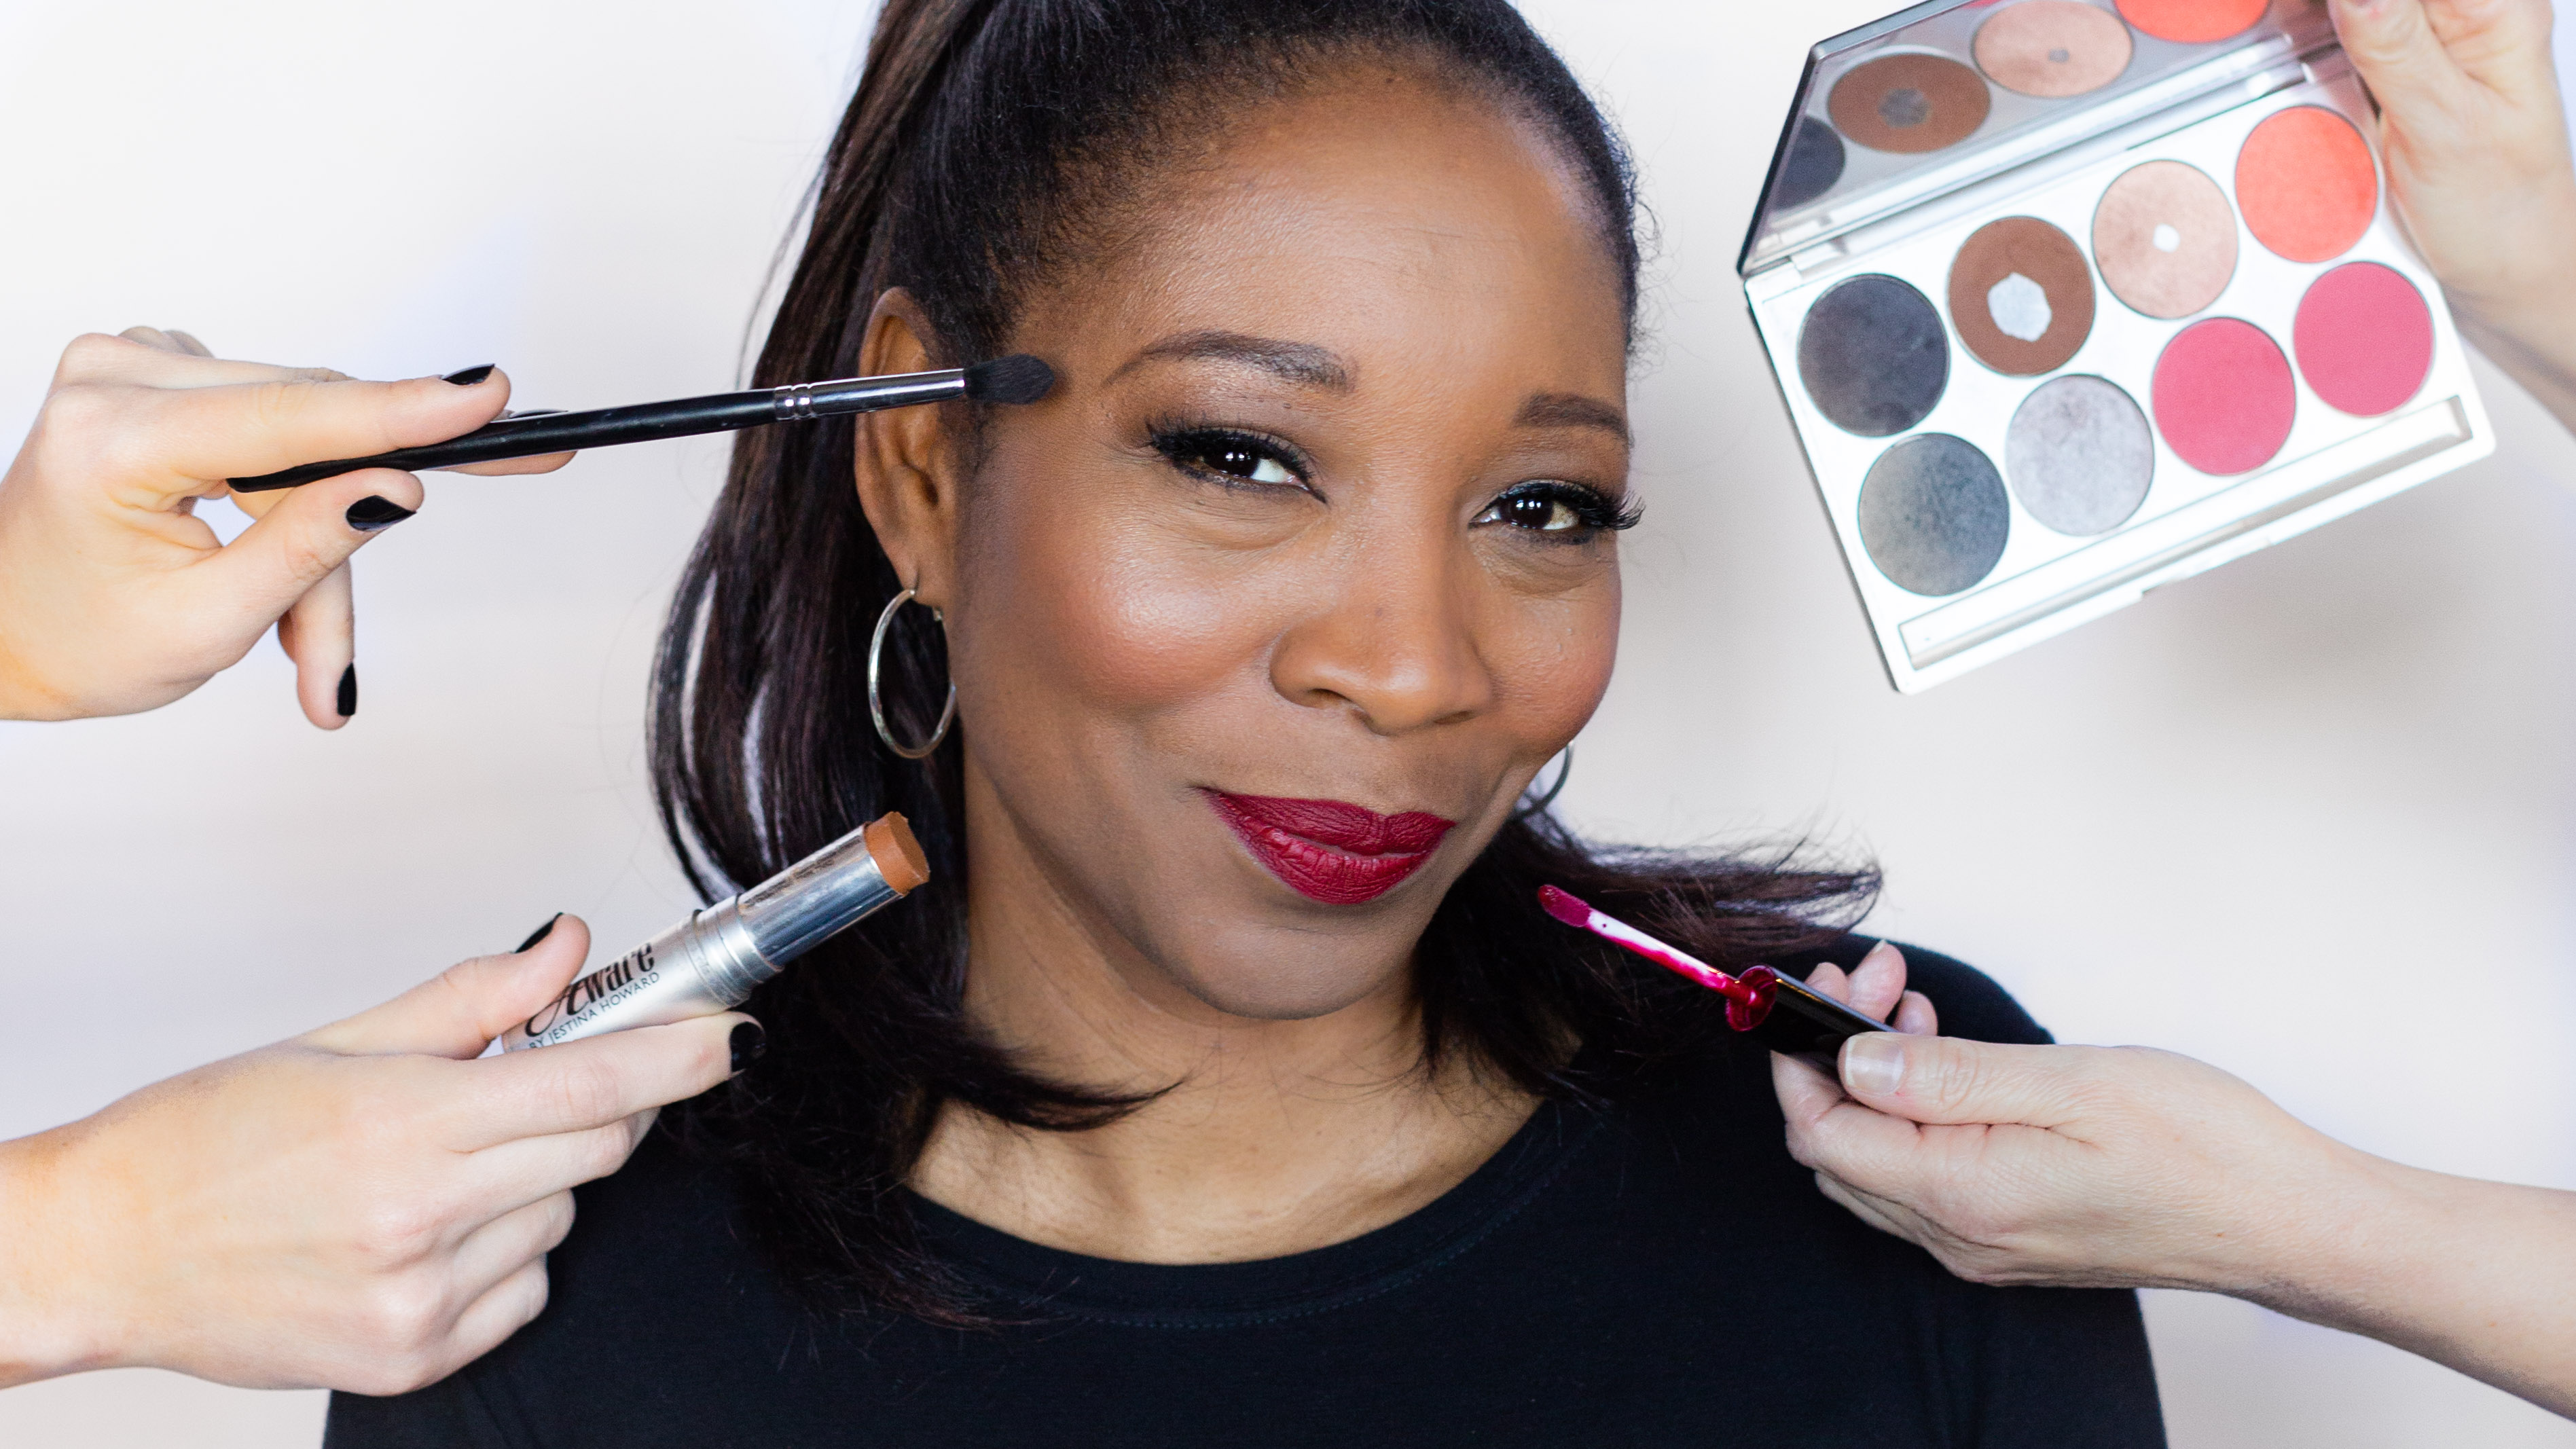 Alabama makeup artist turns childhood dream into a rewarding career